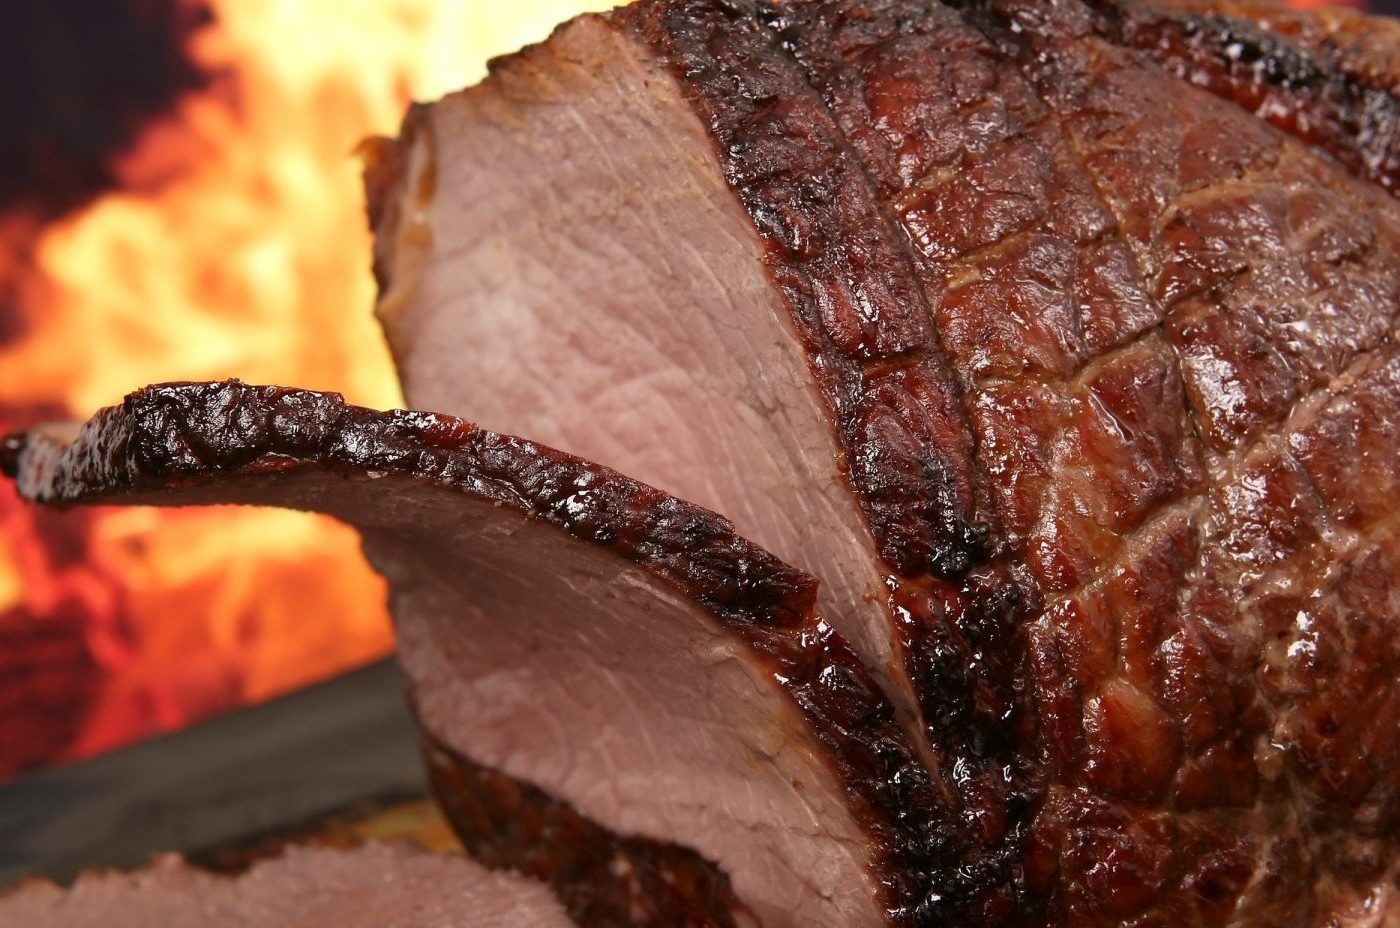 Consumo excessivo de carne aumenta as chances de problemas renais